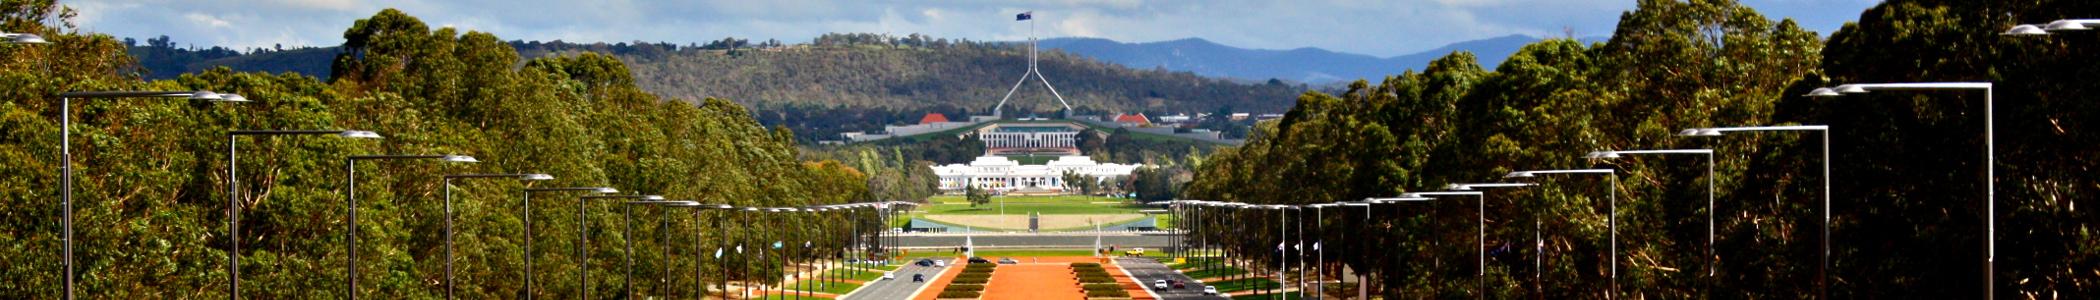 Banner image for Canberra on GigsGuide